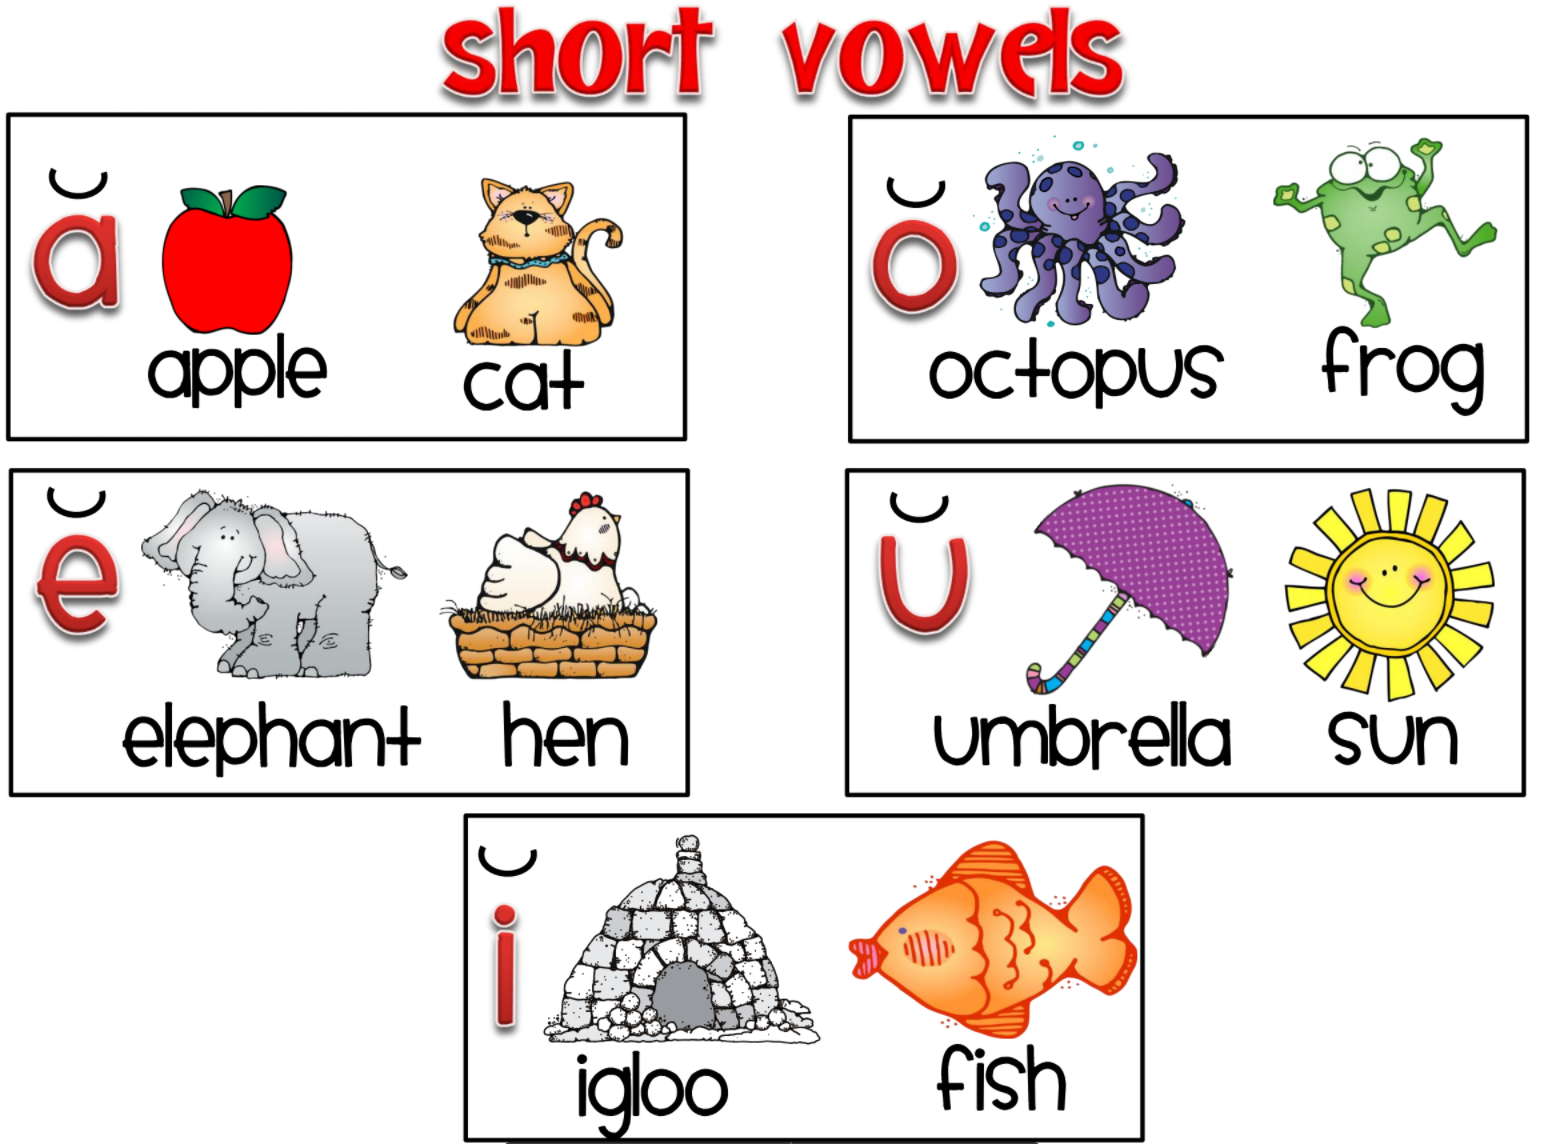 Short vowels. Short Vowel Sounds. Short and long Vowels. Phonics short Vowels. Short Vowels reading.